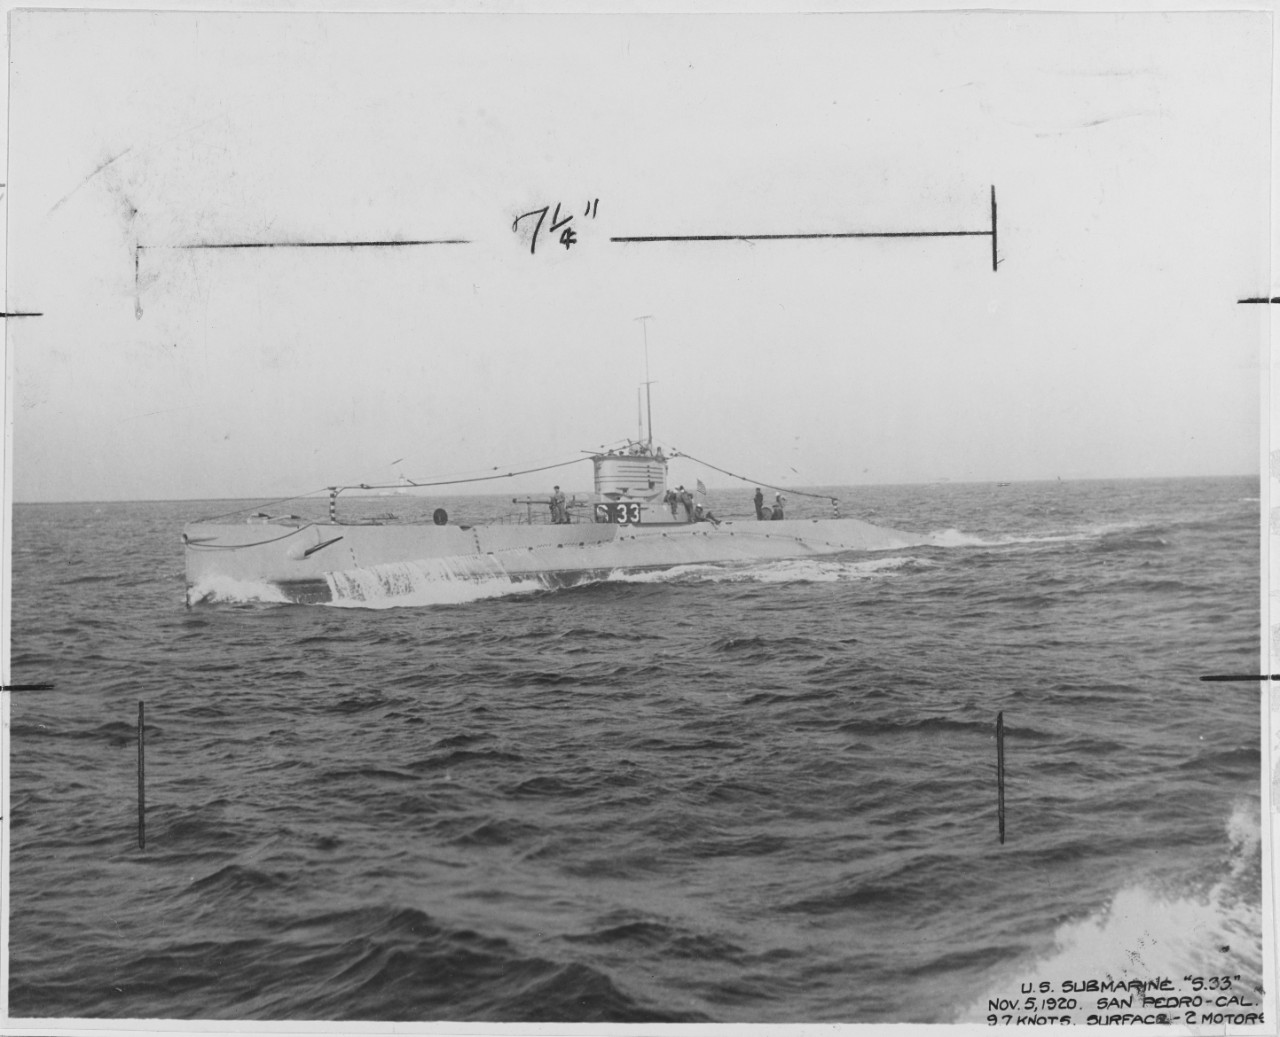 U.S. Submarine USS S-33.